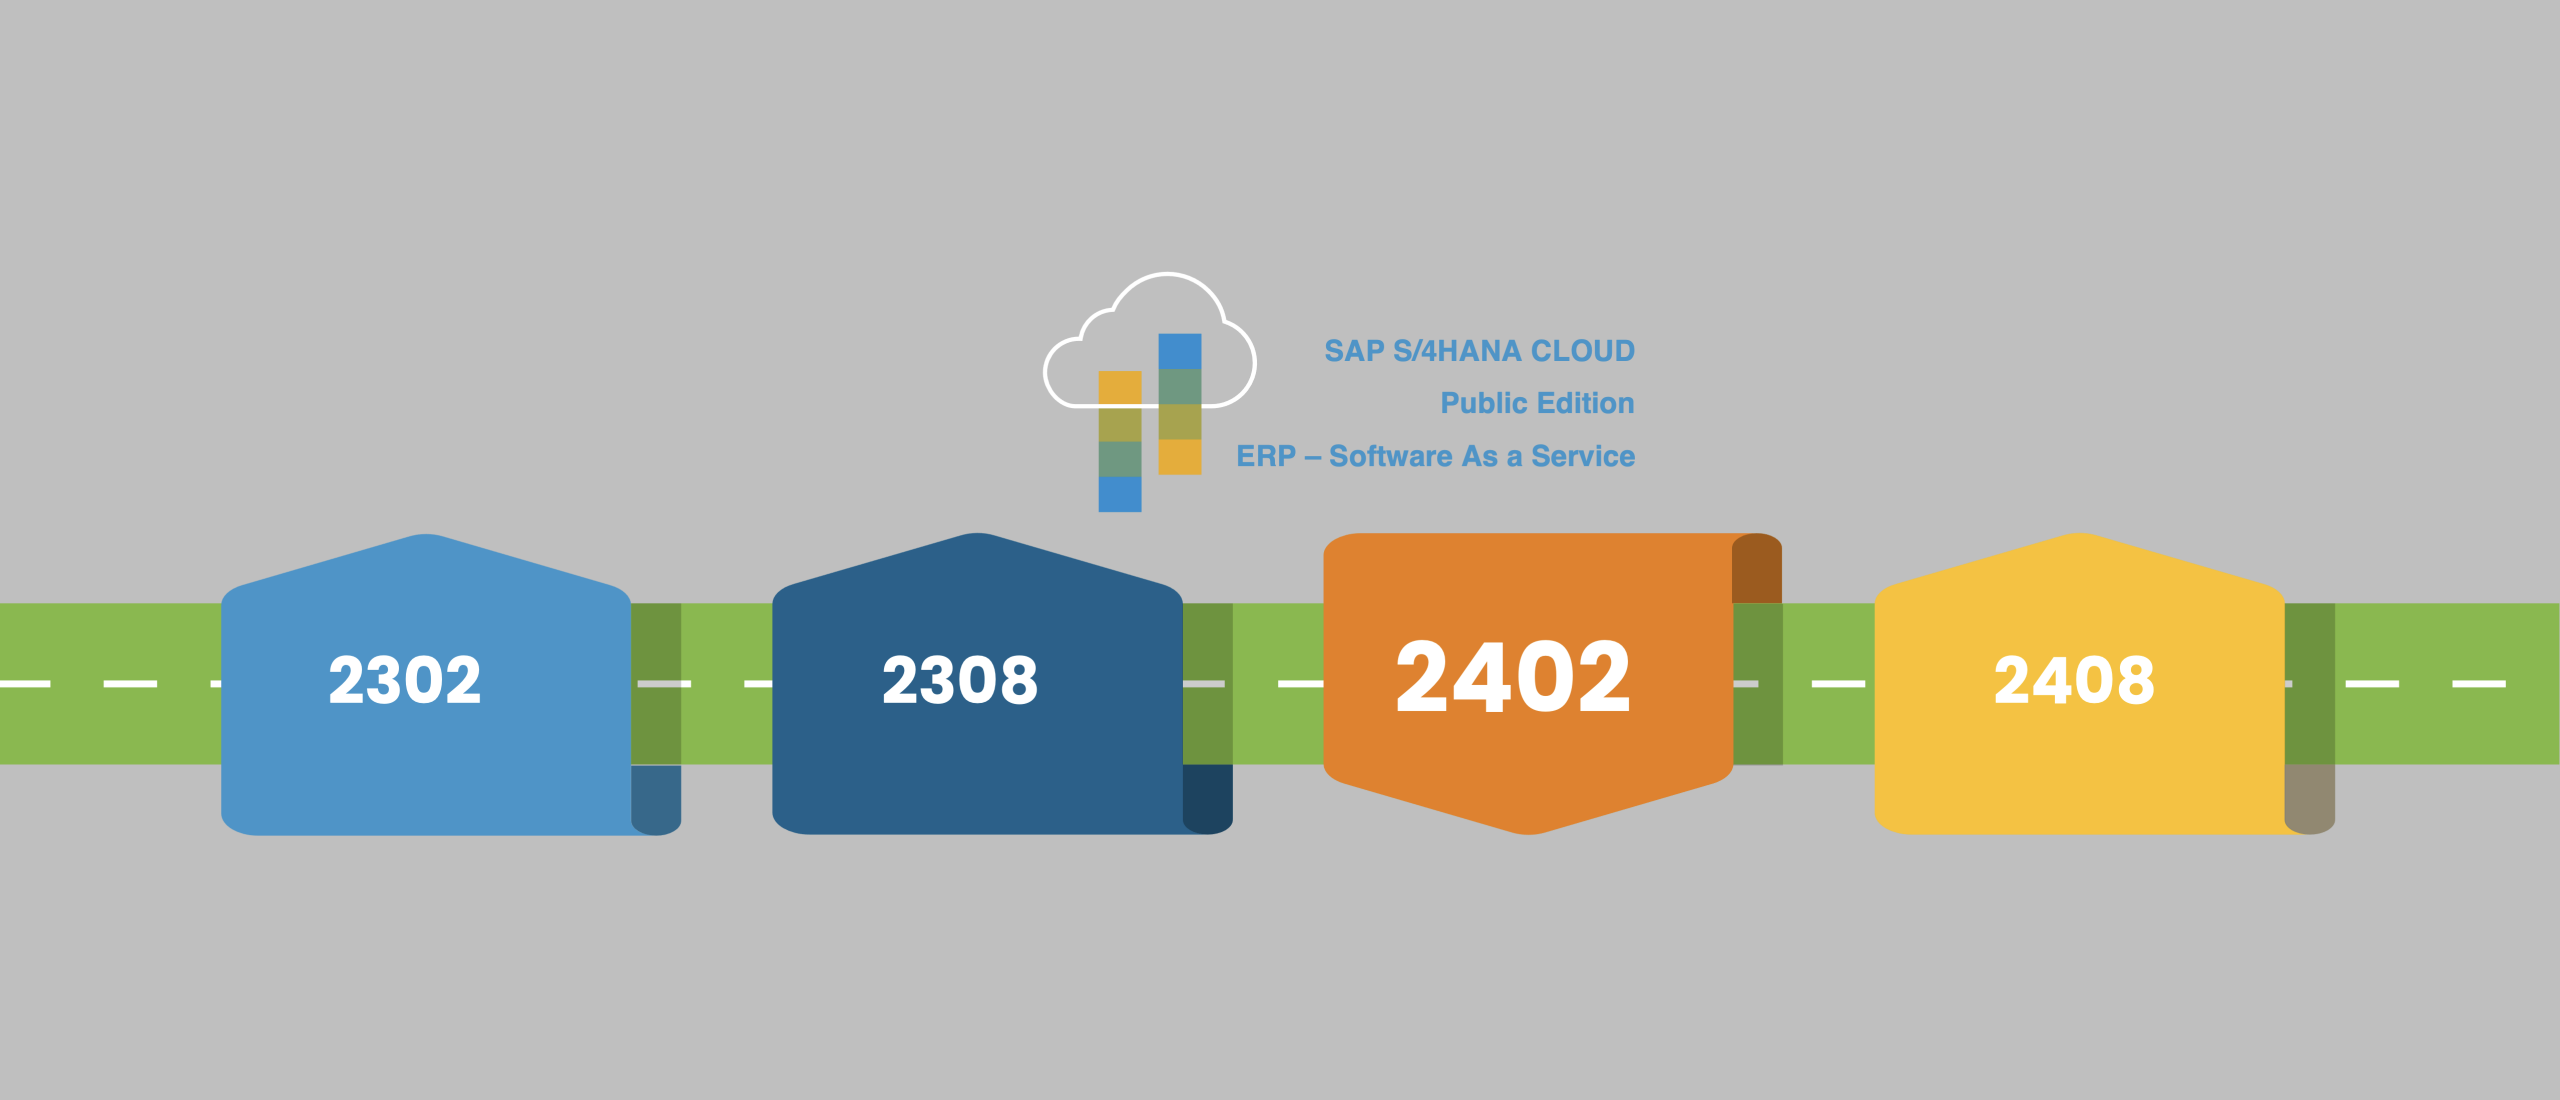 Release 2402 Update SAP S/4HANA Cloud, Public Edition